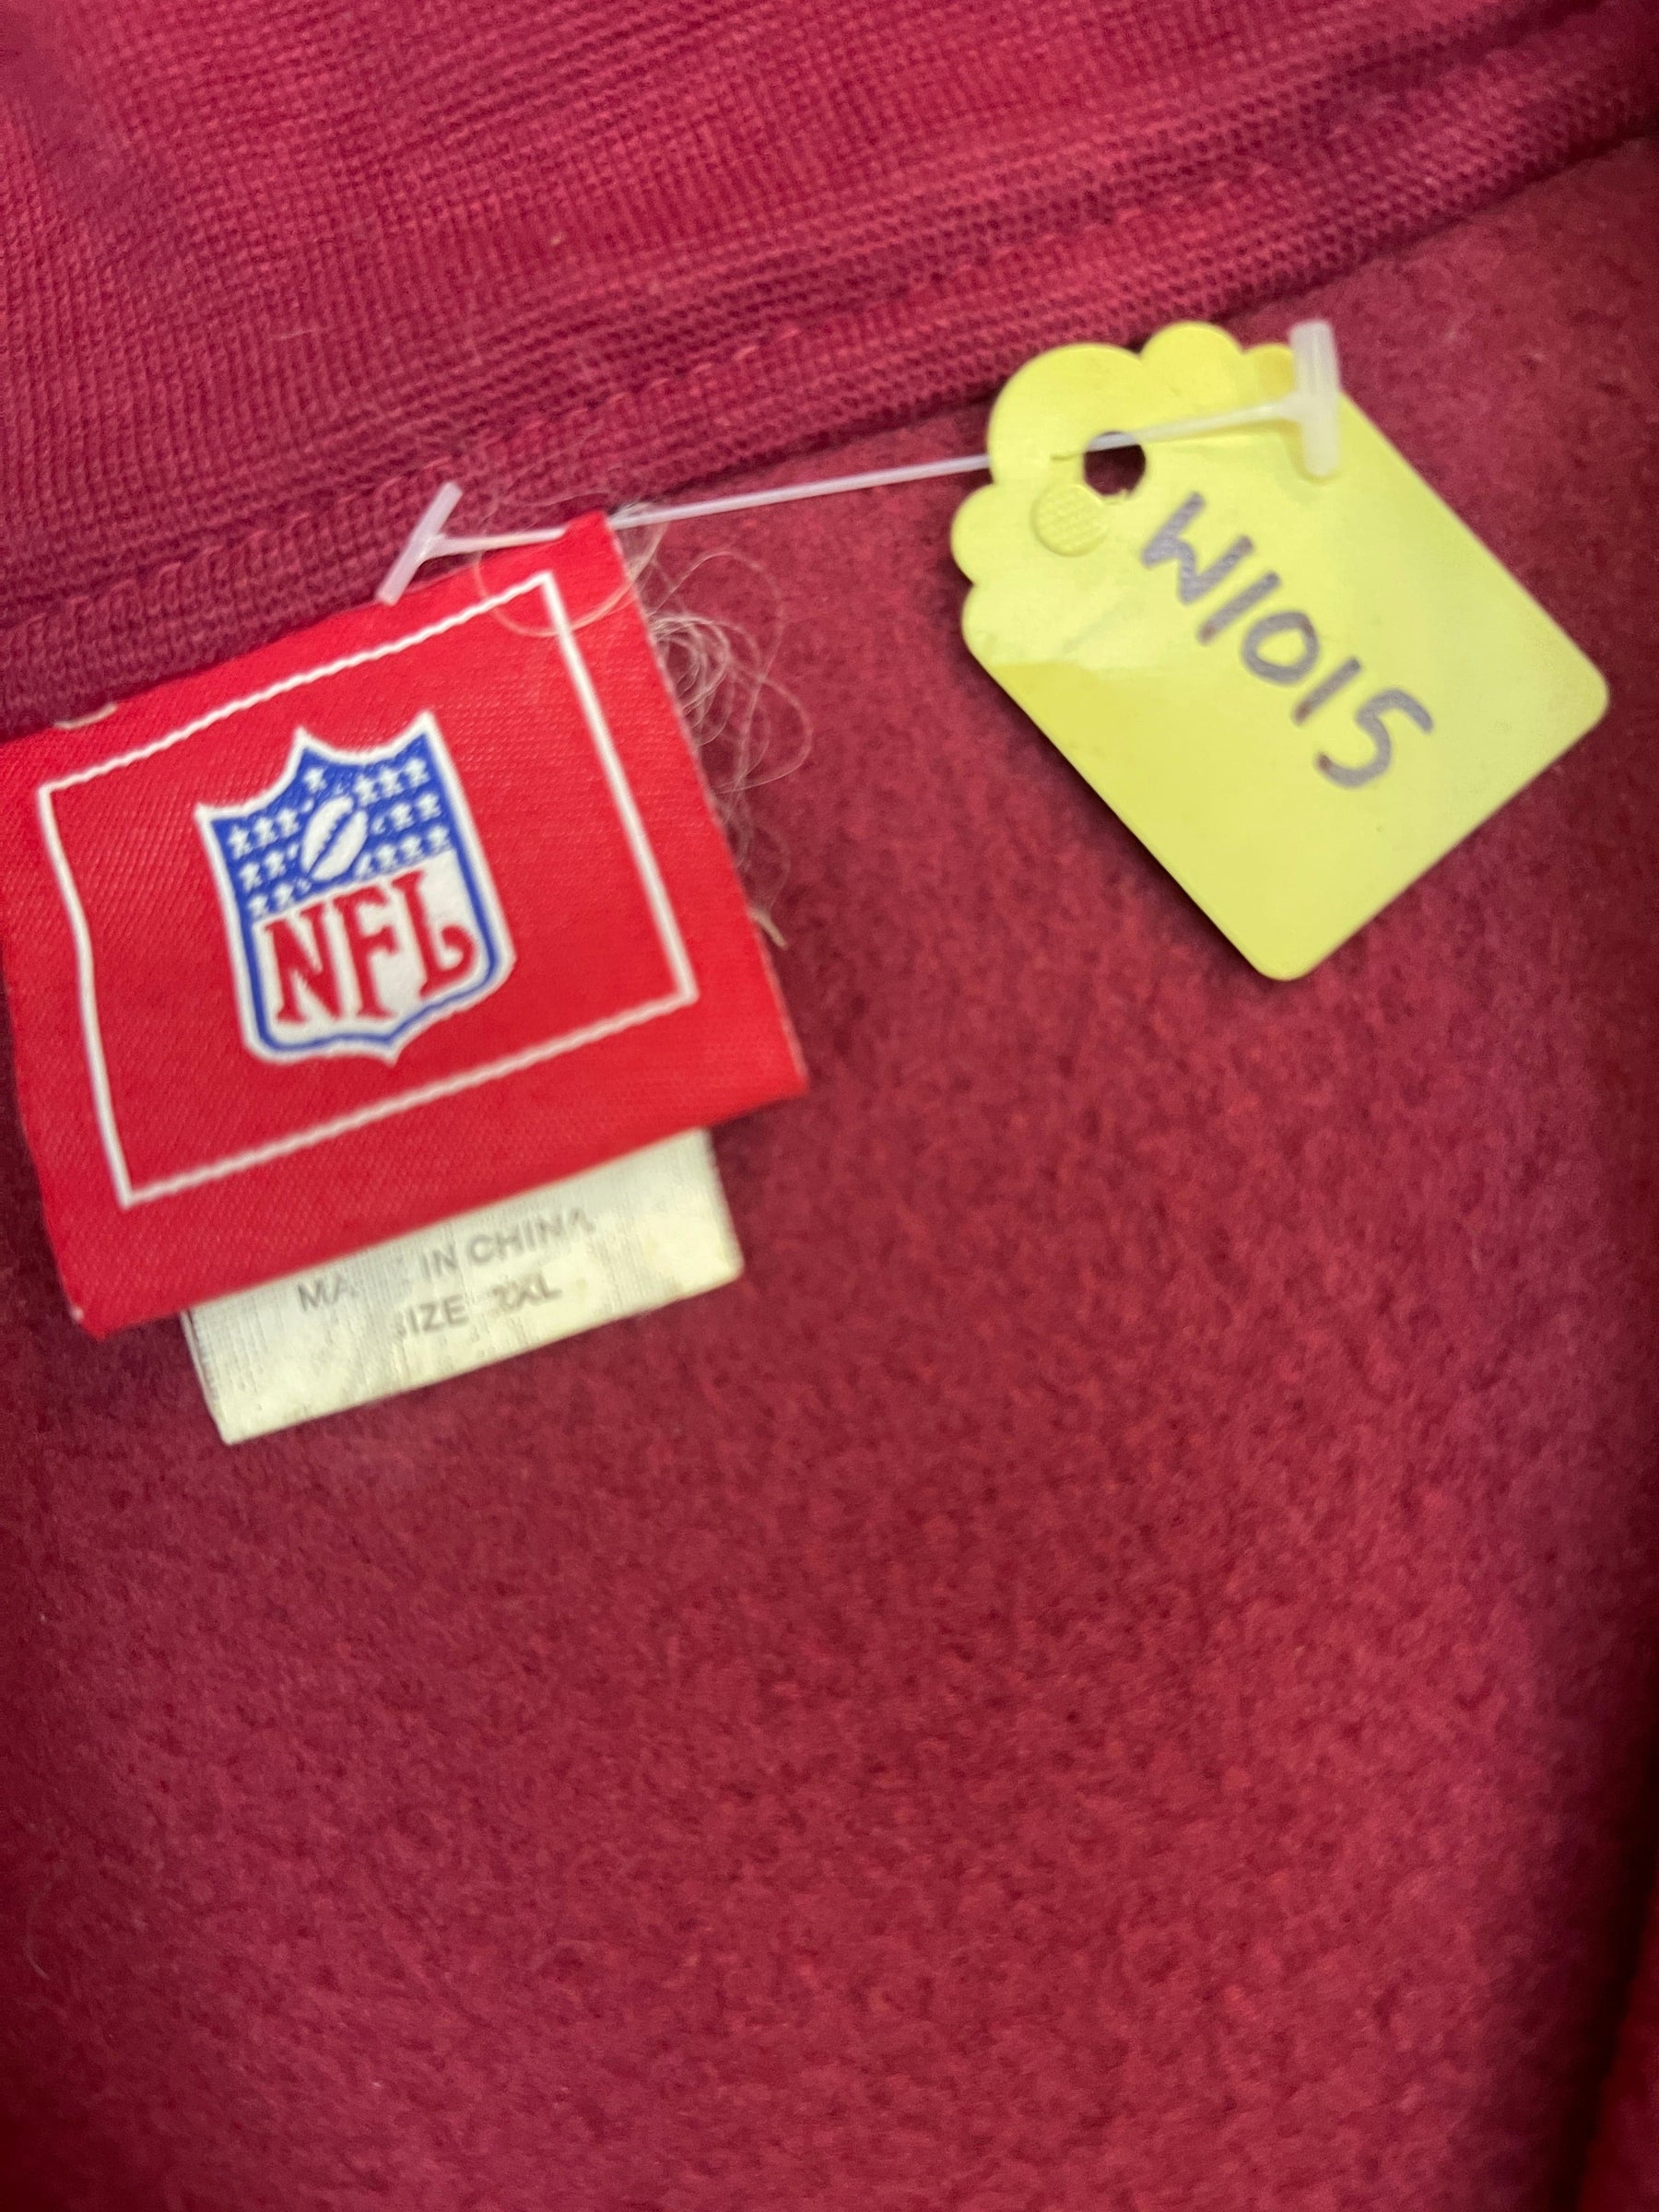 NFL Washington Commanders (Redskins) Soft 1/4 Zip Pullover Fleece Men's 2X-Large